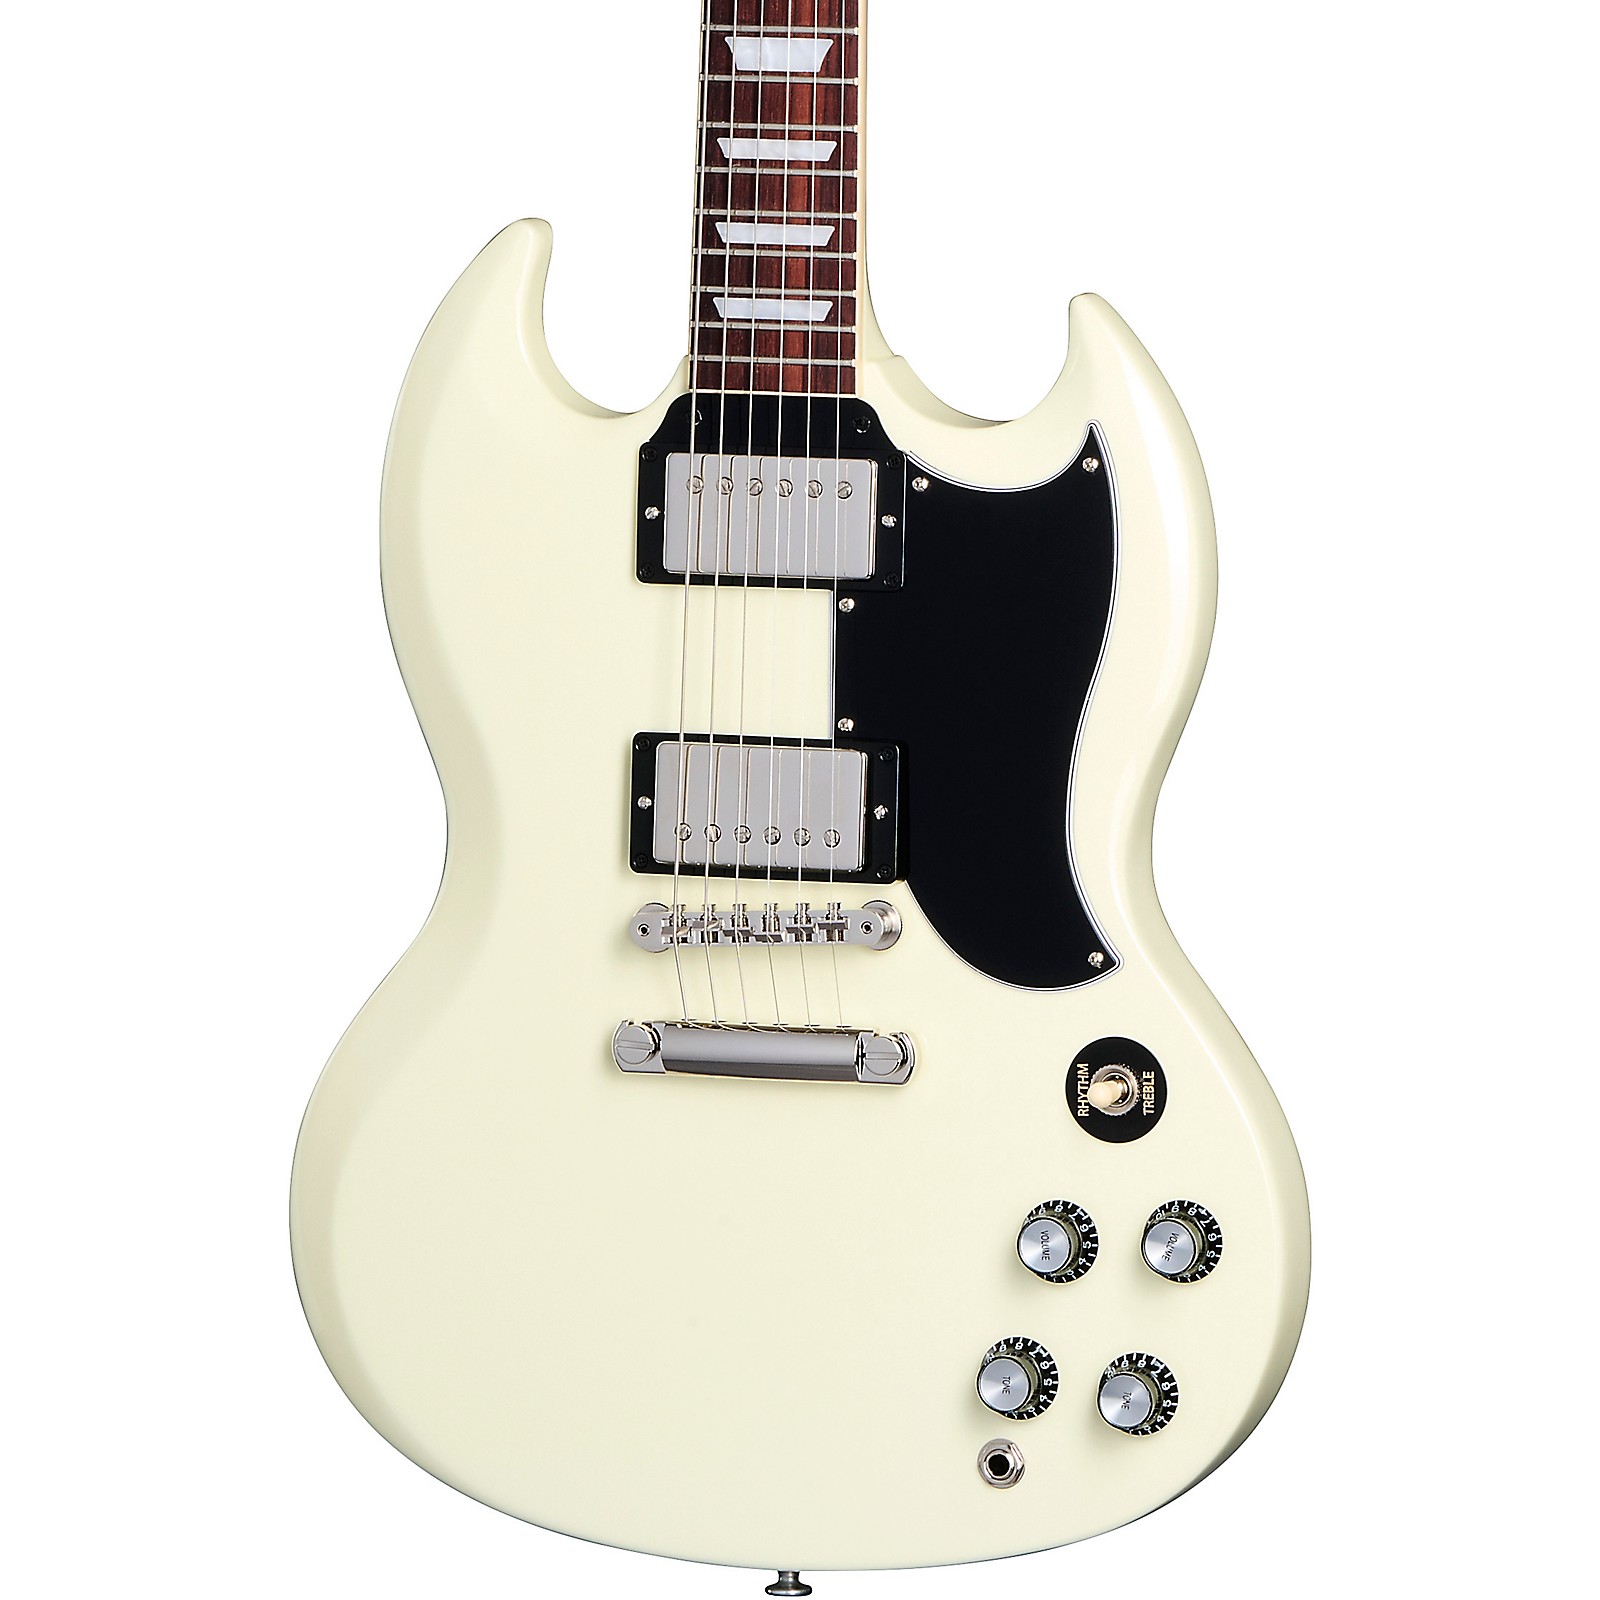 Gibson SG Standard '61 Electric Guitar Classic White | Guitar Center